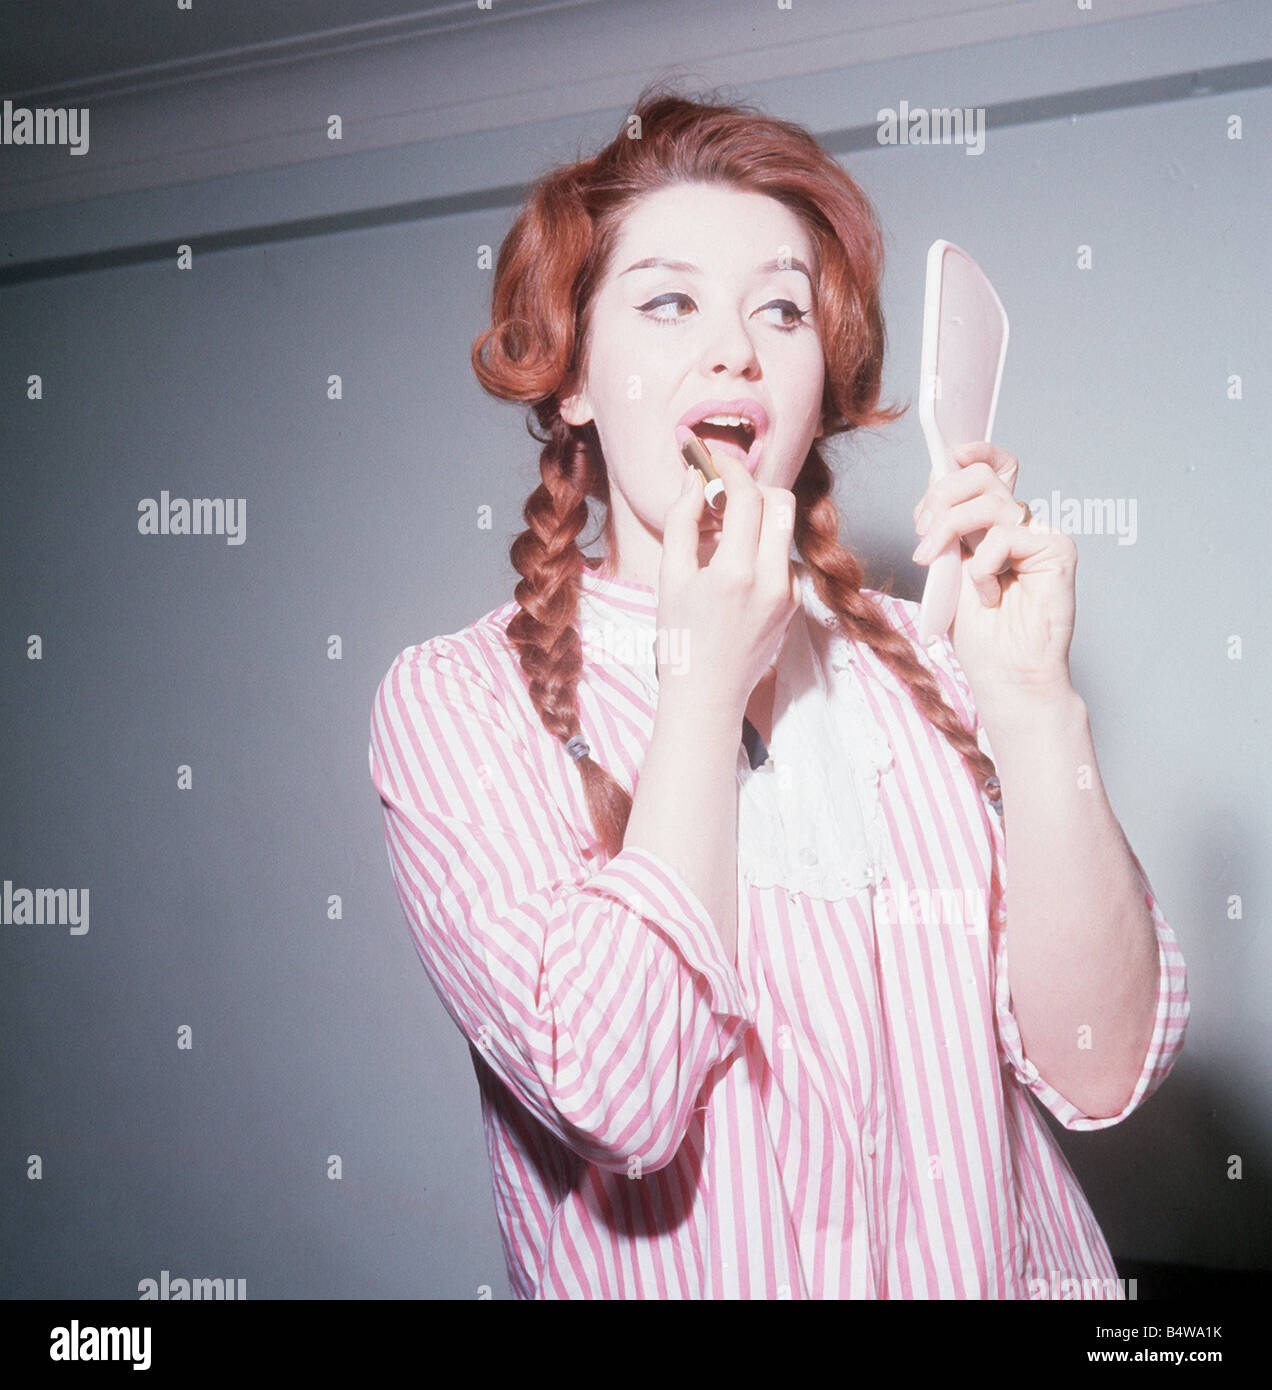 Heller Toren actrice modèle 1964 puting sur lipstick holding hand mirror  chemise rayée rose Photo Stock - Alamy